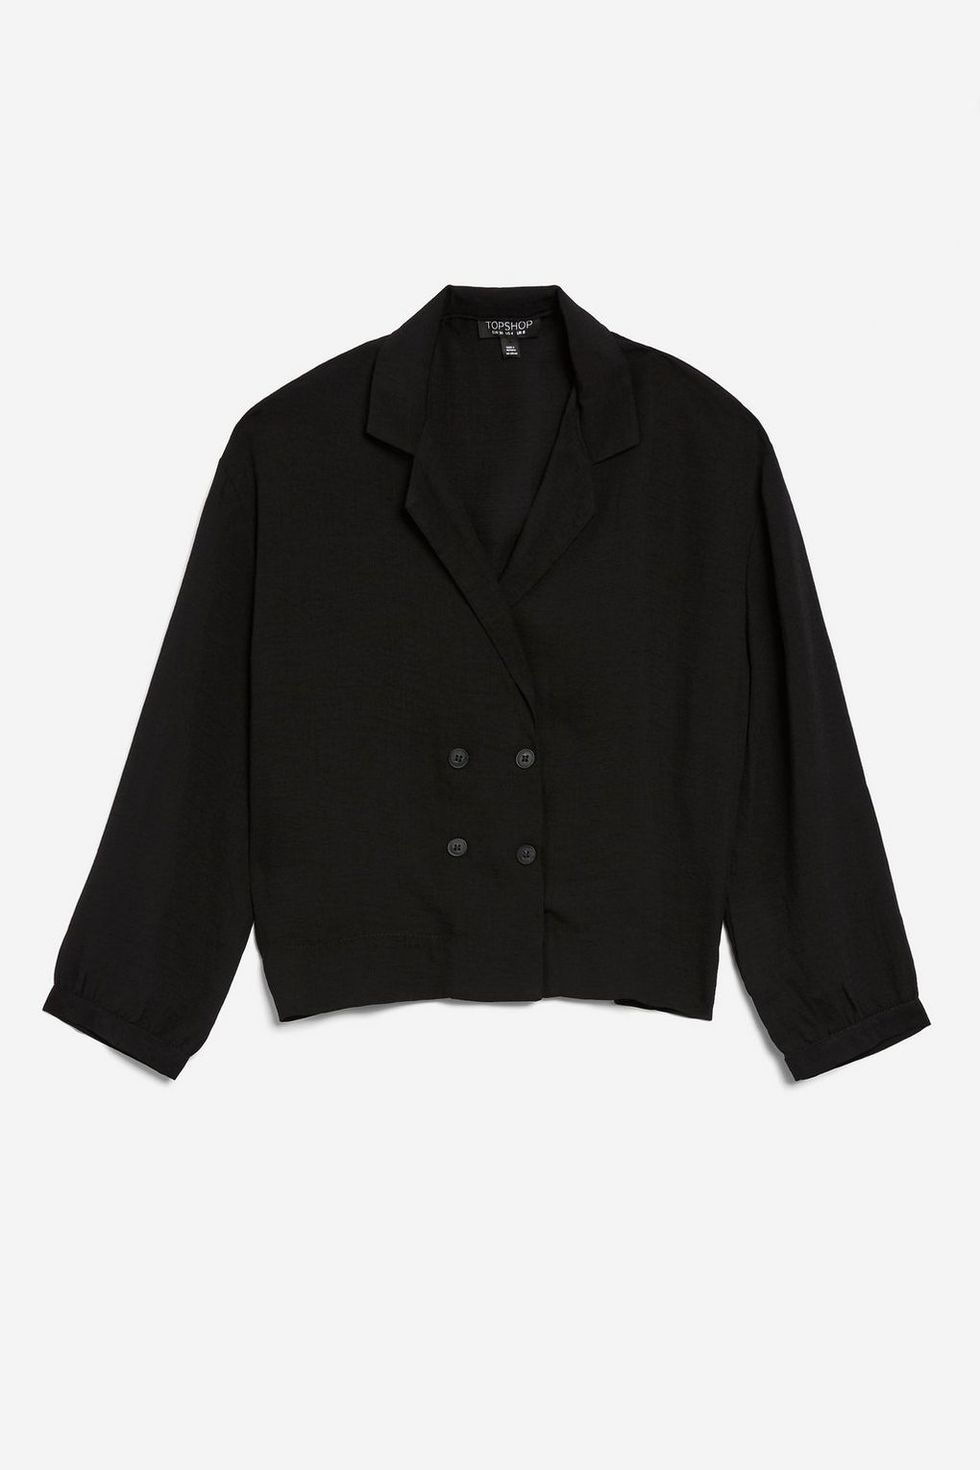 Clothing, Black, Sleeve, Outerwear, Collar, Jacket, Button, T-shirt, Shirt, Top, 